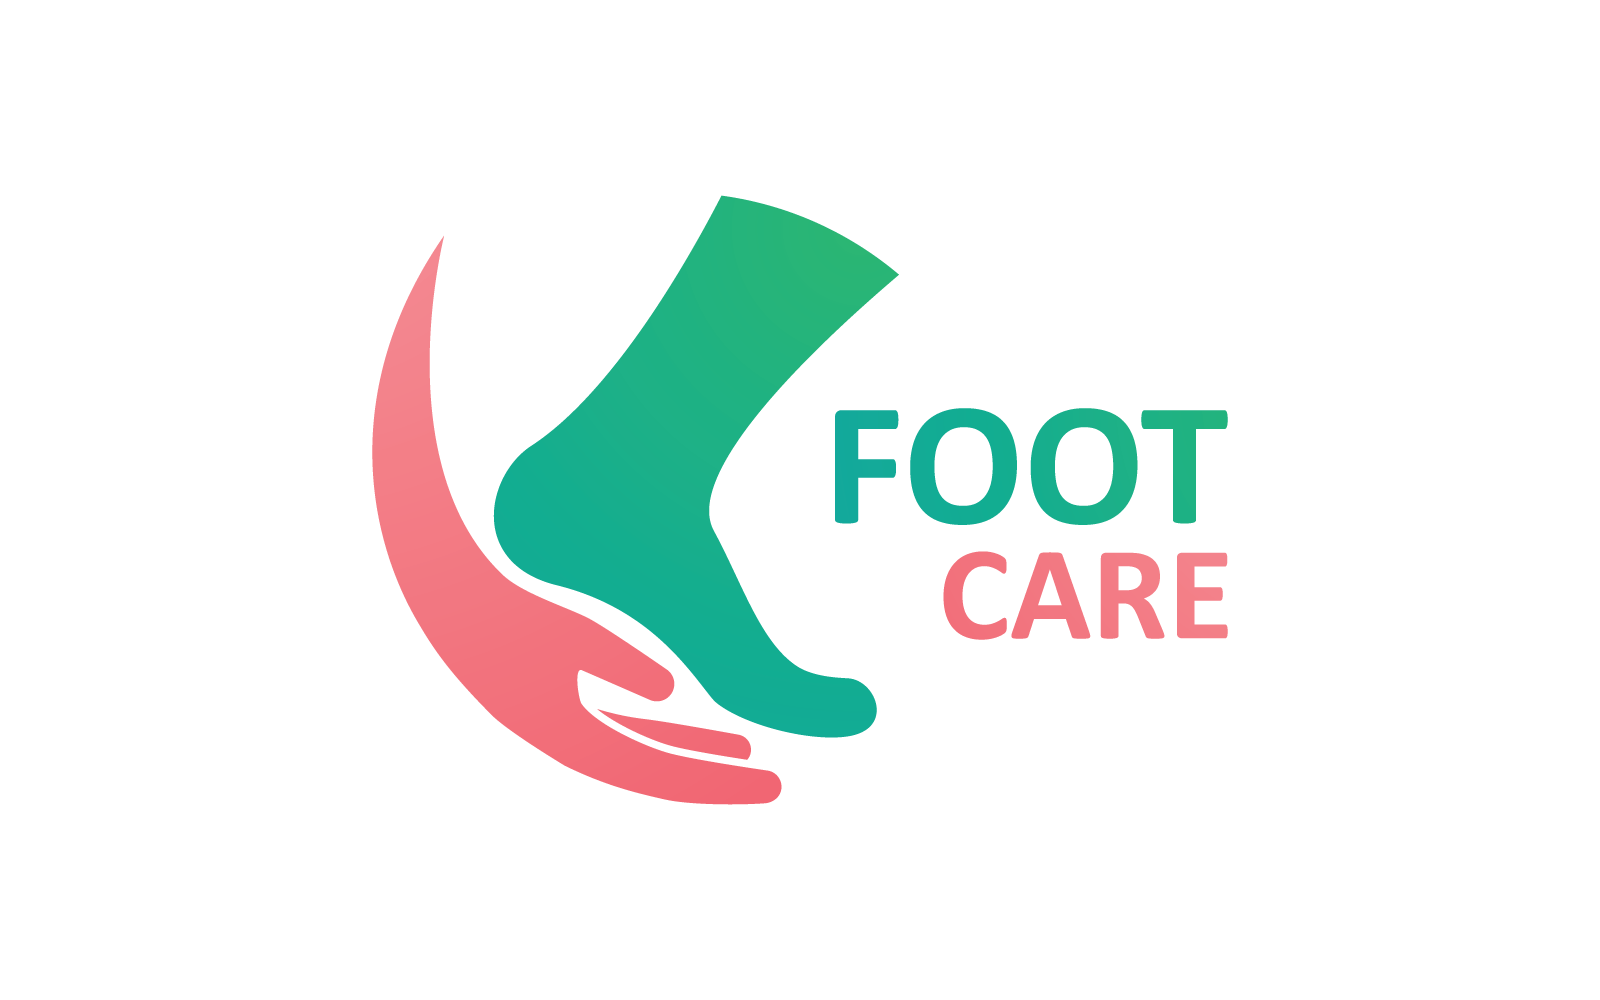 Foot care logo illustration vector design